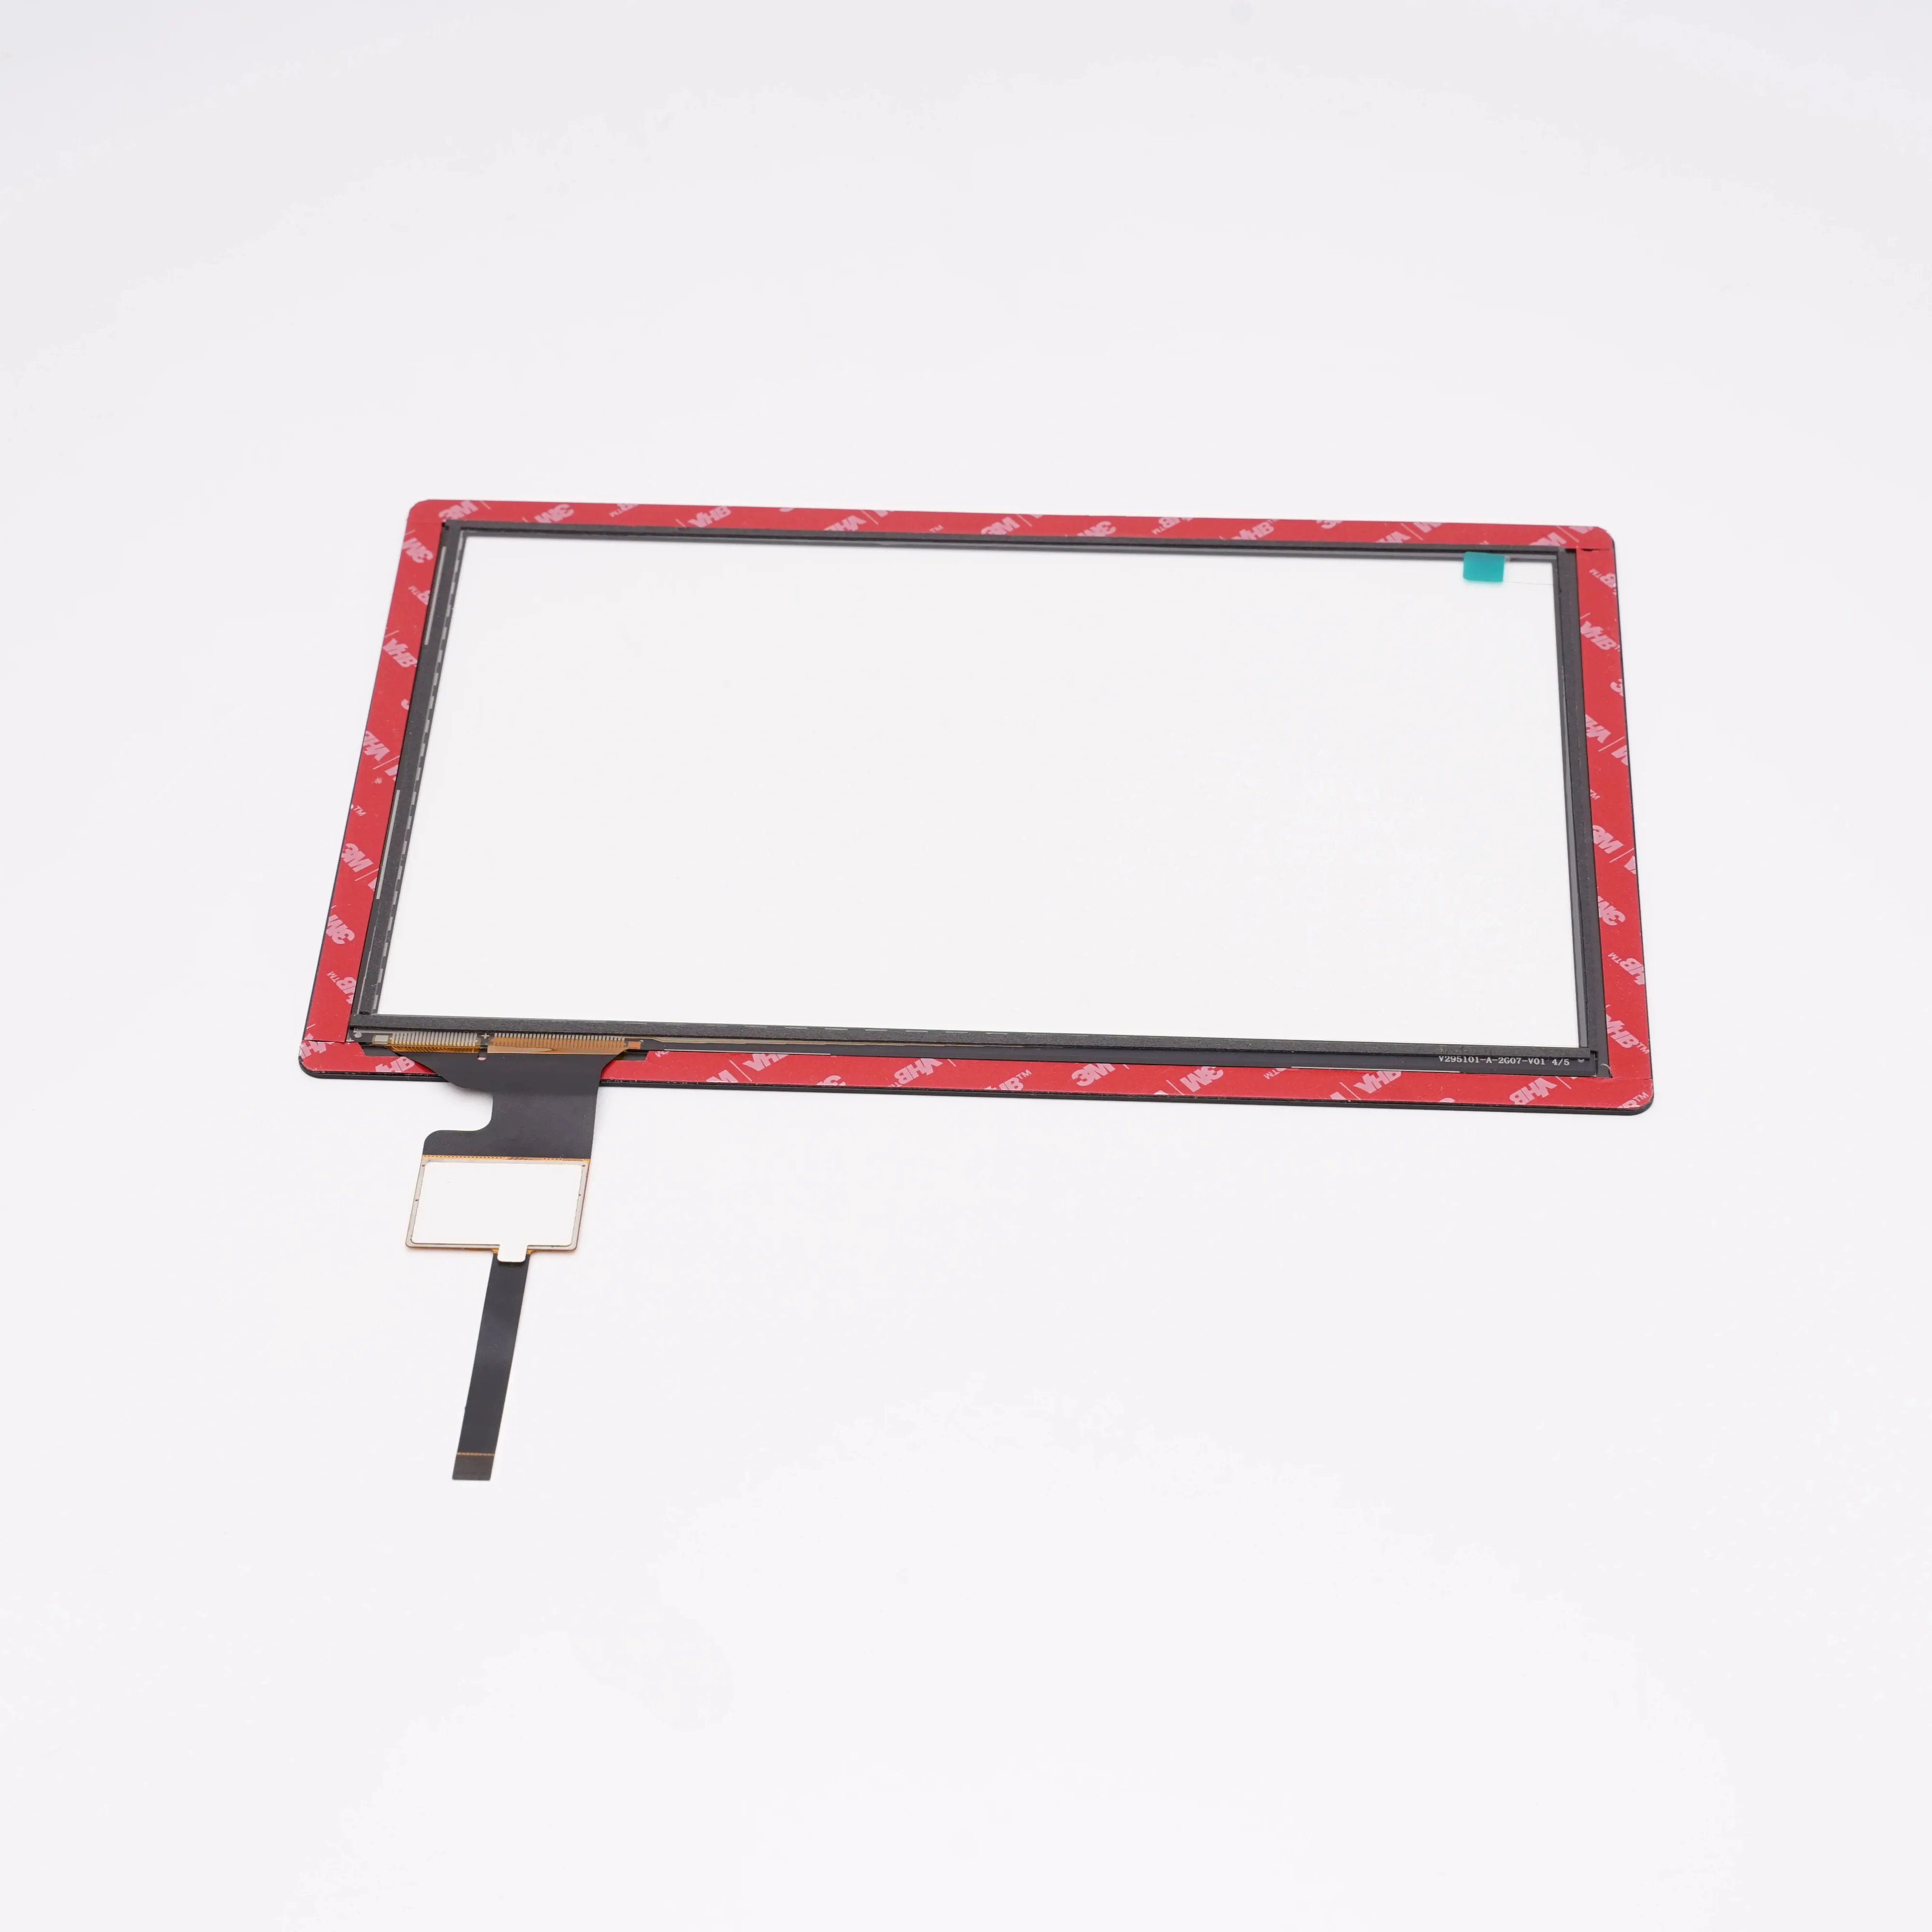 Módulo de pantalla táctil OKE PCAP para monitores LCD 1920x1080 pantalla LCD industrial